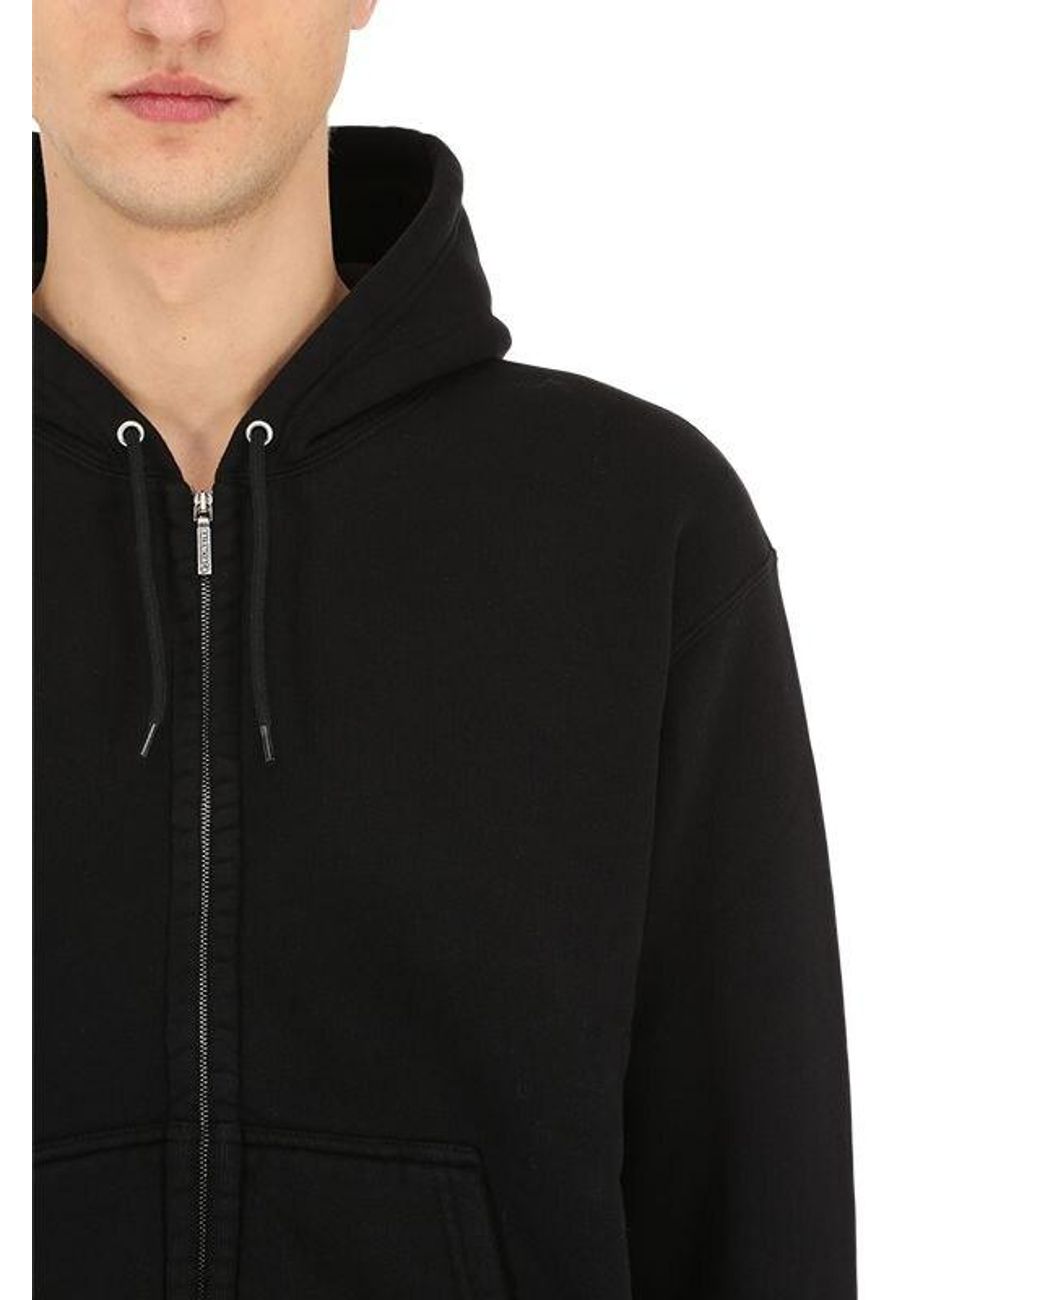 Balenciaga I Love Techno Zip-up Sweatshirt Hoodie in Black for Men | Lyst